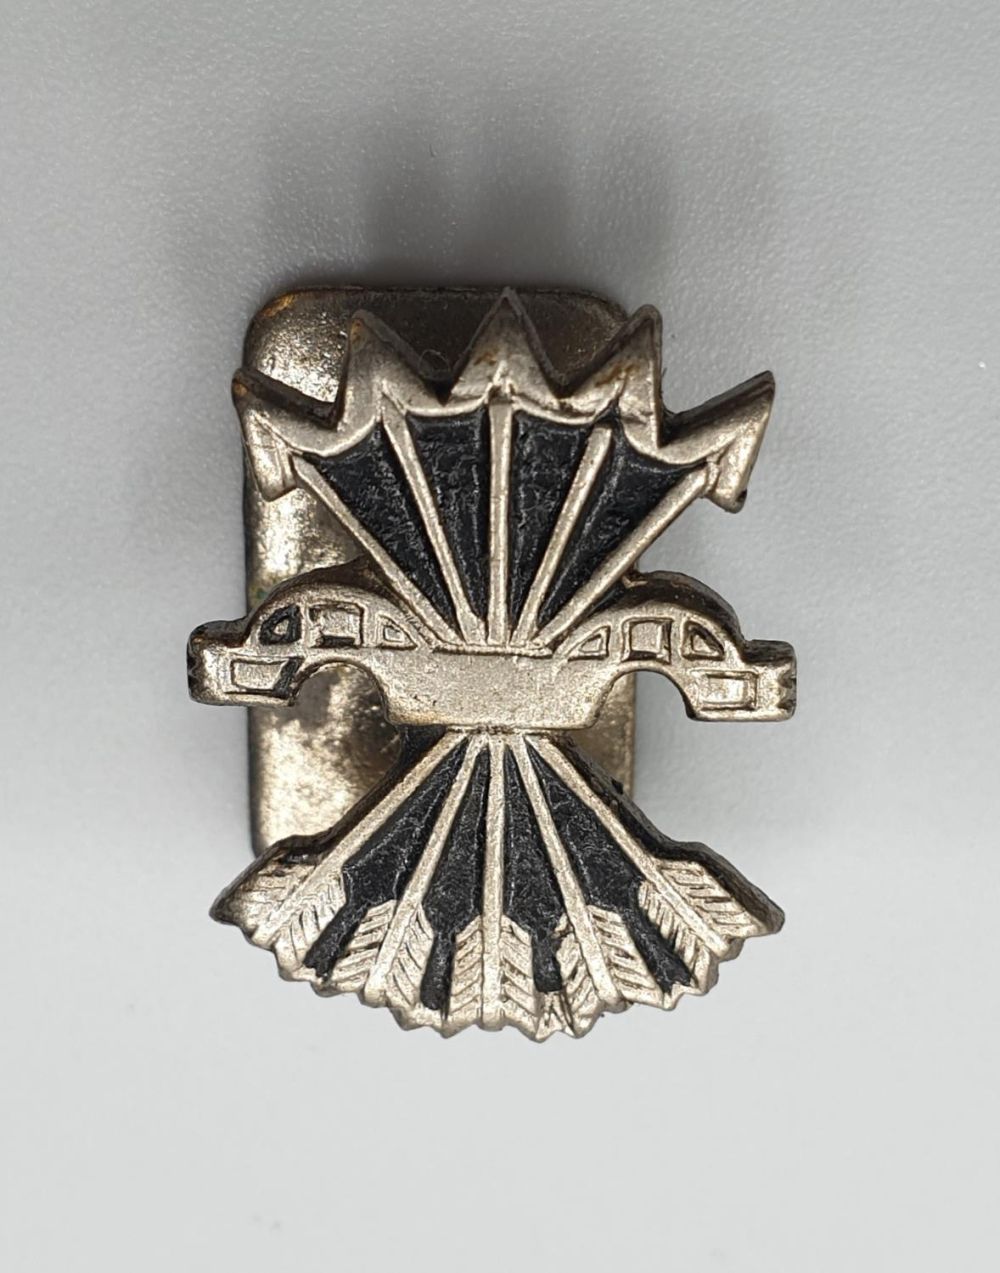 Spanish Civil War German Condor Legion Lapel Pin. Numbered on the back